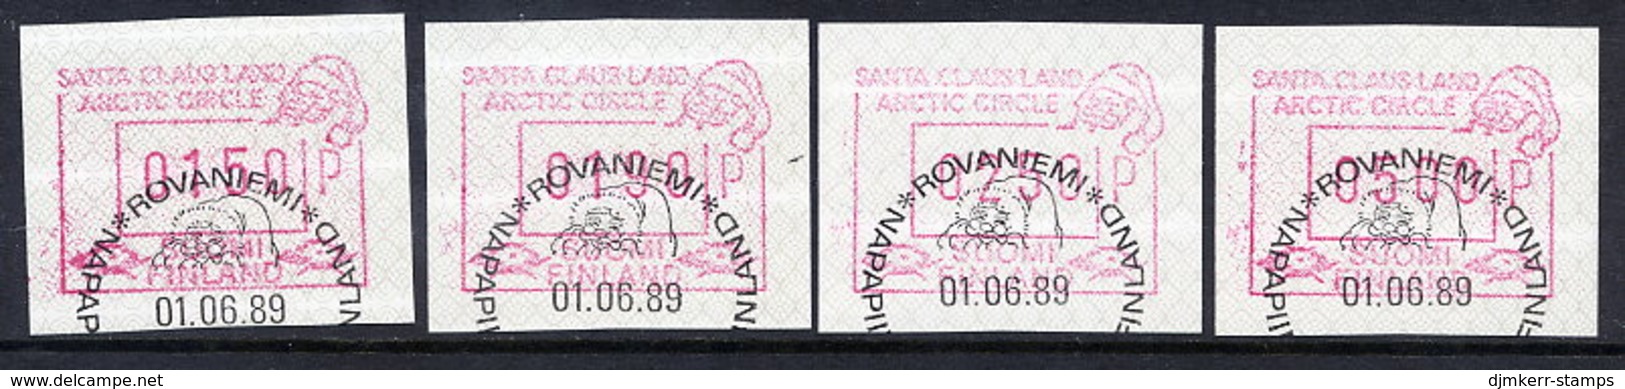 FINLAND 1989 Santa Claus Land , 4 Different Values Used .Michel 6 - Timbres De Distributeurs [ATM]